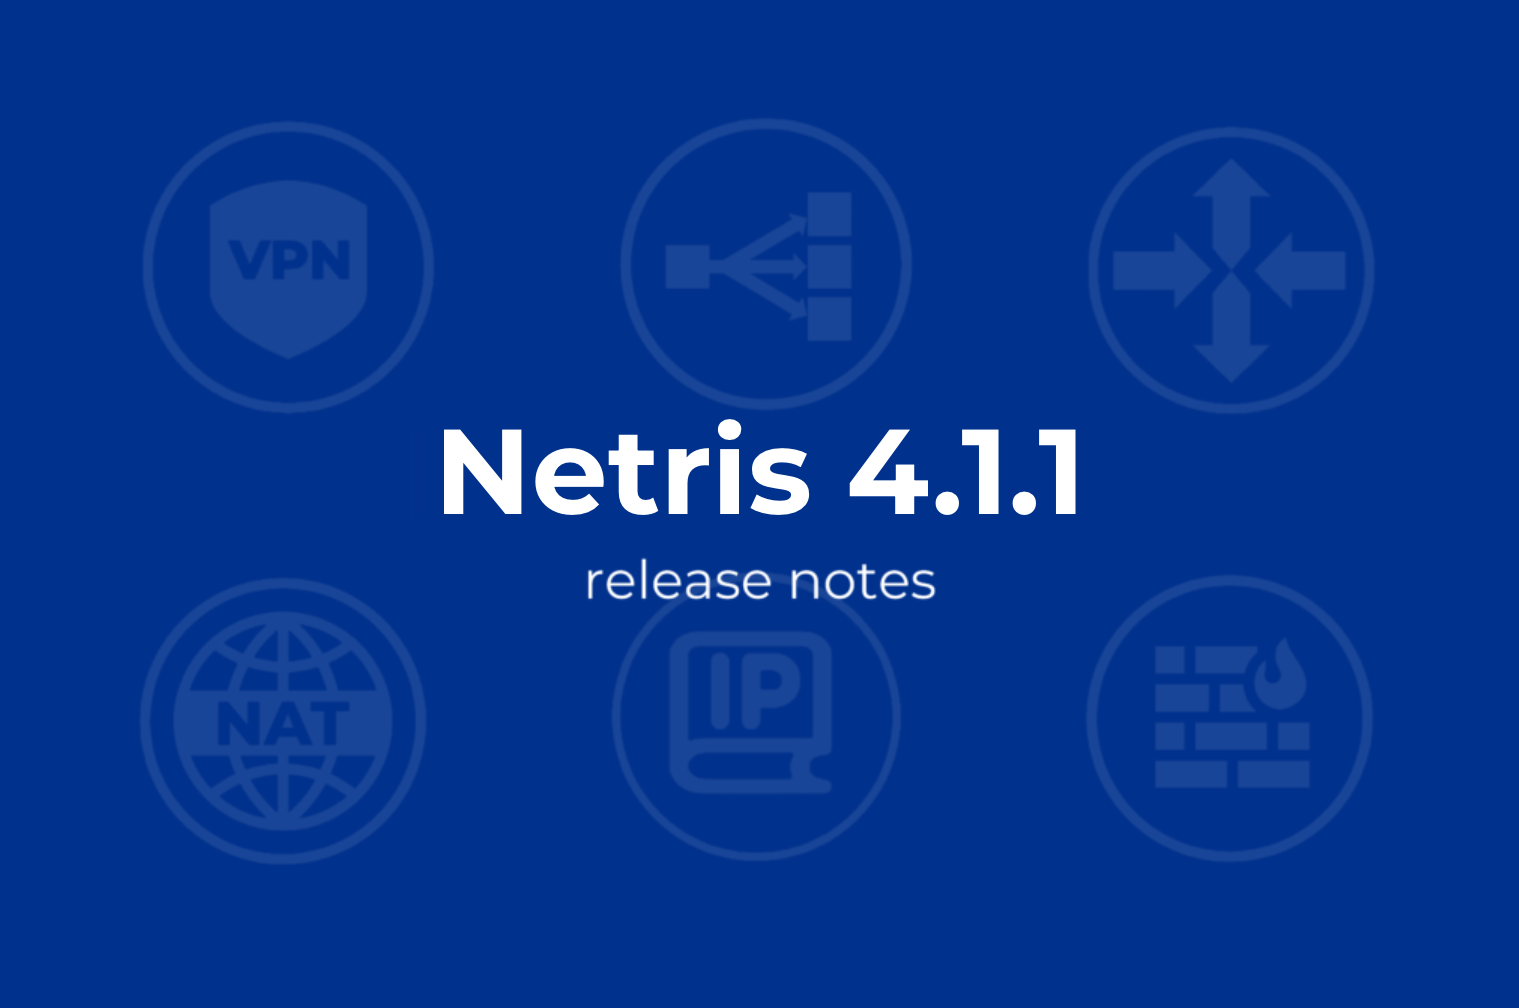 Netris Release 4.1.1